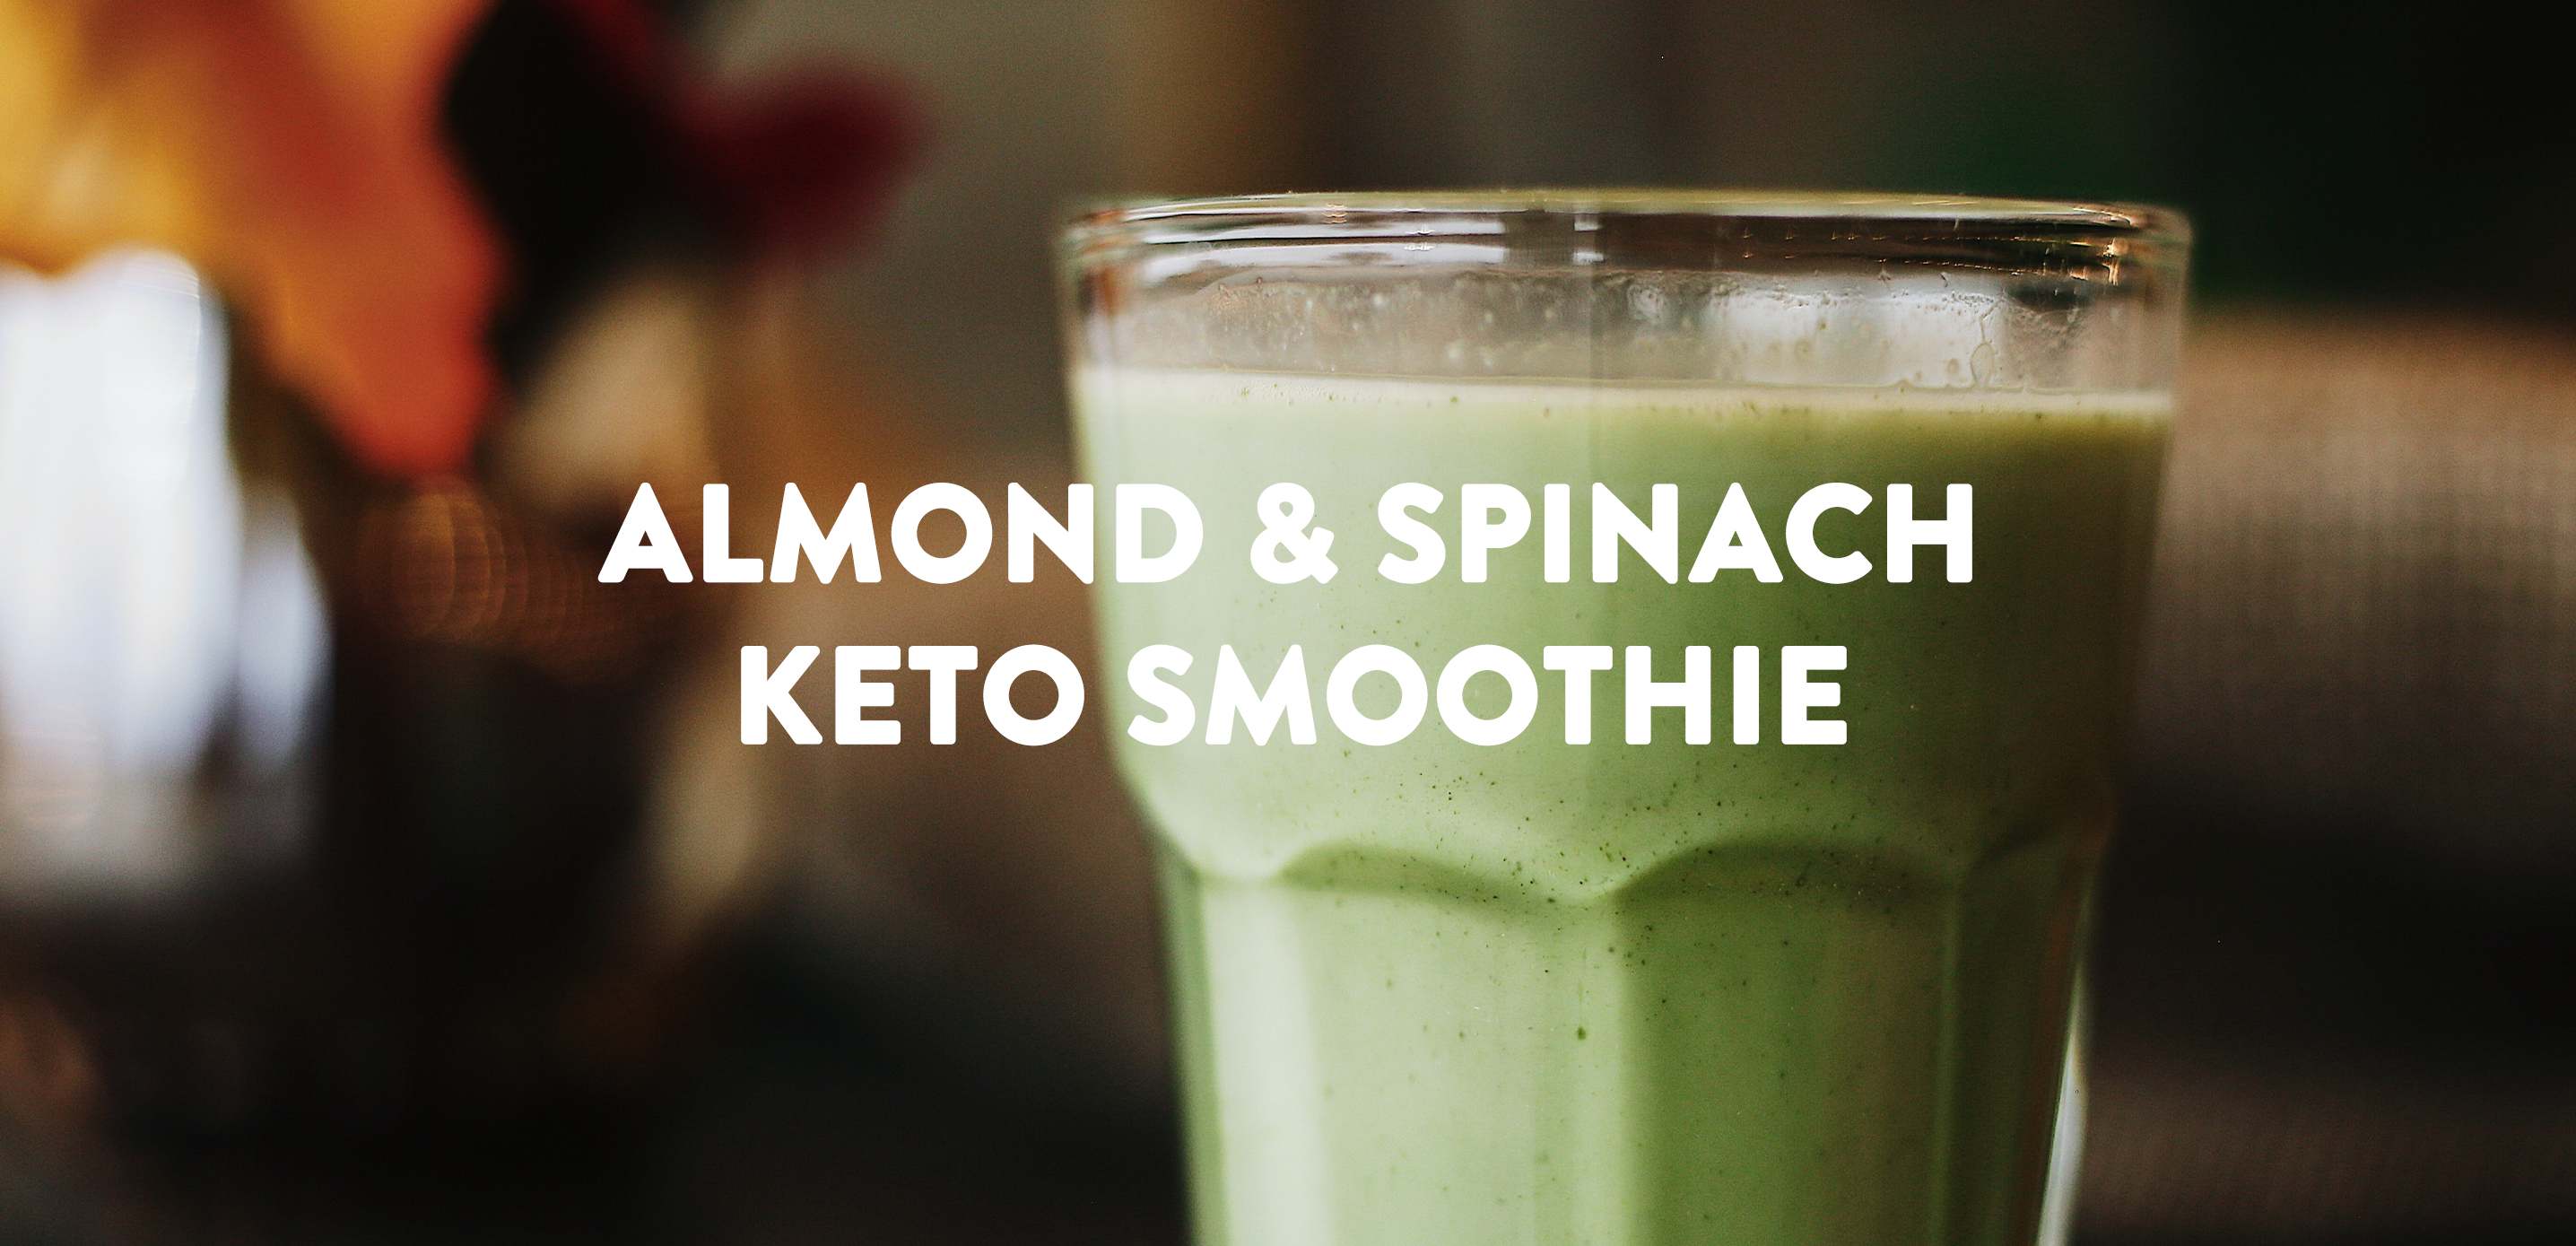 Almond & Spinach Keto Smoothie